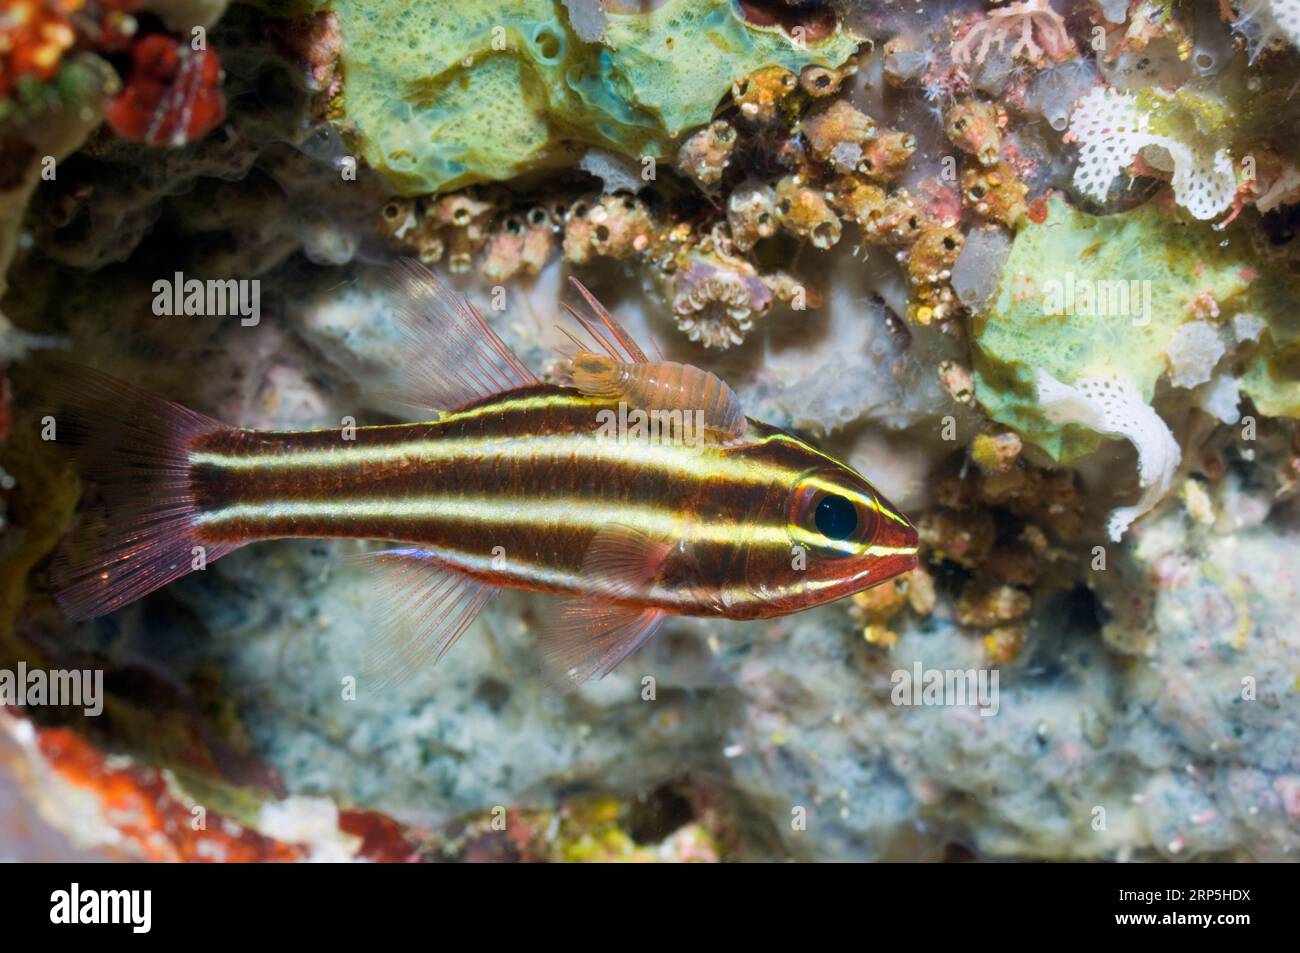 Parasitic isopod (Nerocila sp.) attached to Blackstripe cardinalfish (Apogon cf nigrofasciatus).  Raja Ampat, West Papua, Indonesia. Stock Photo